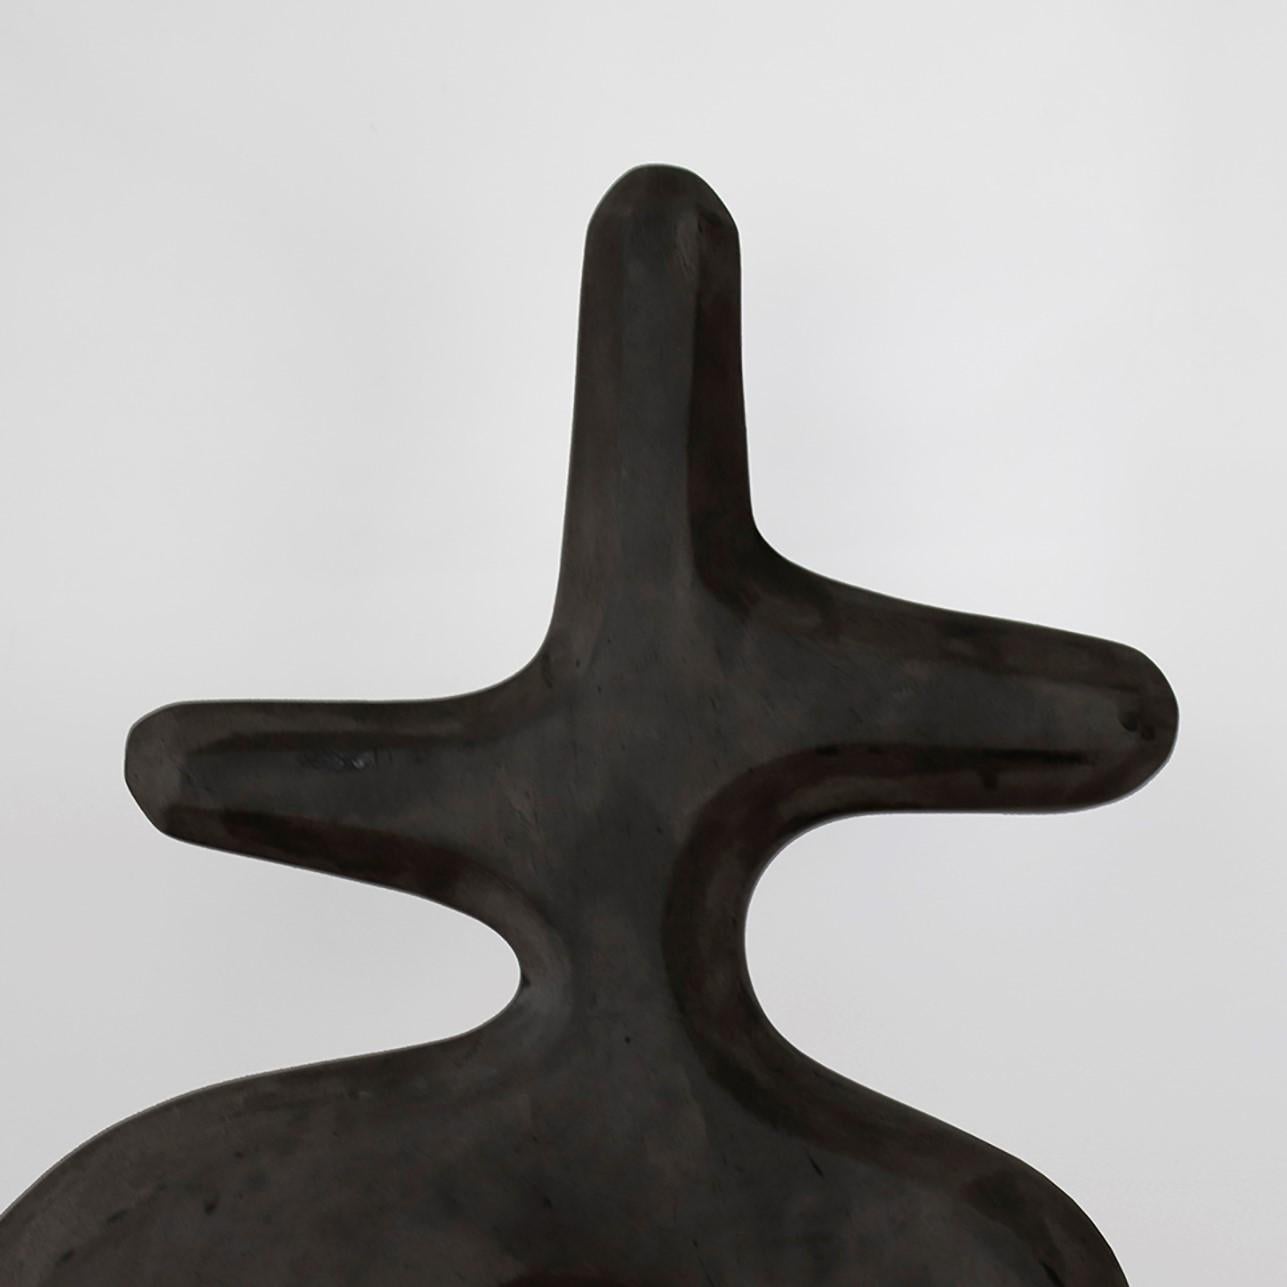 Dutch Sculpture Form No_001 by AOAO